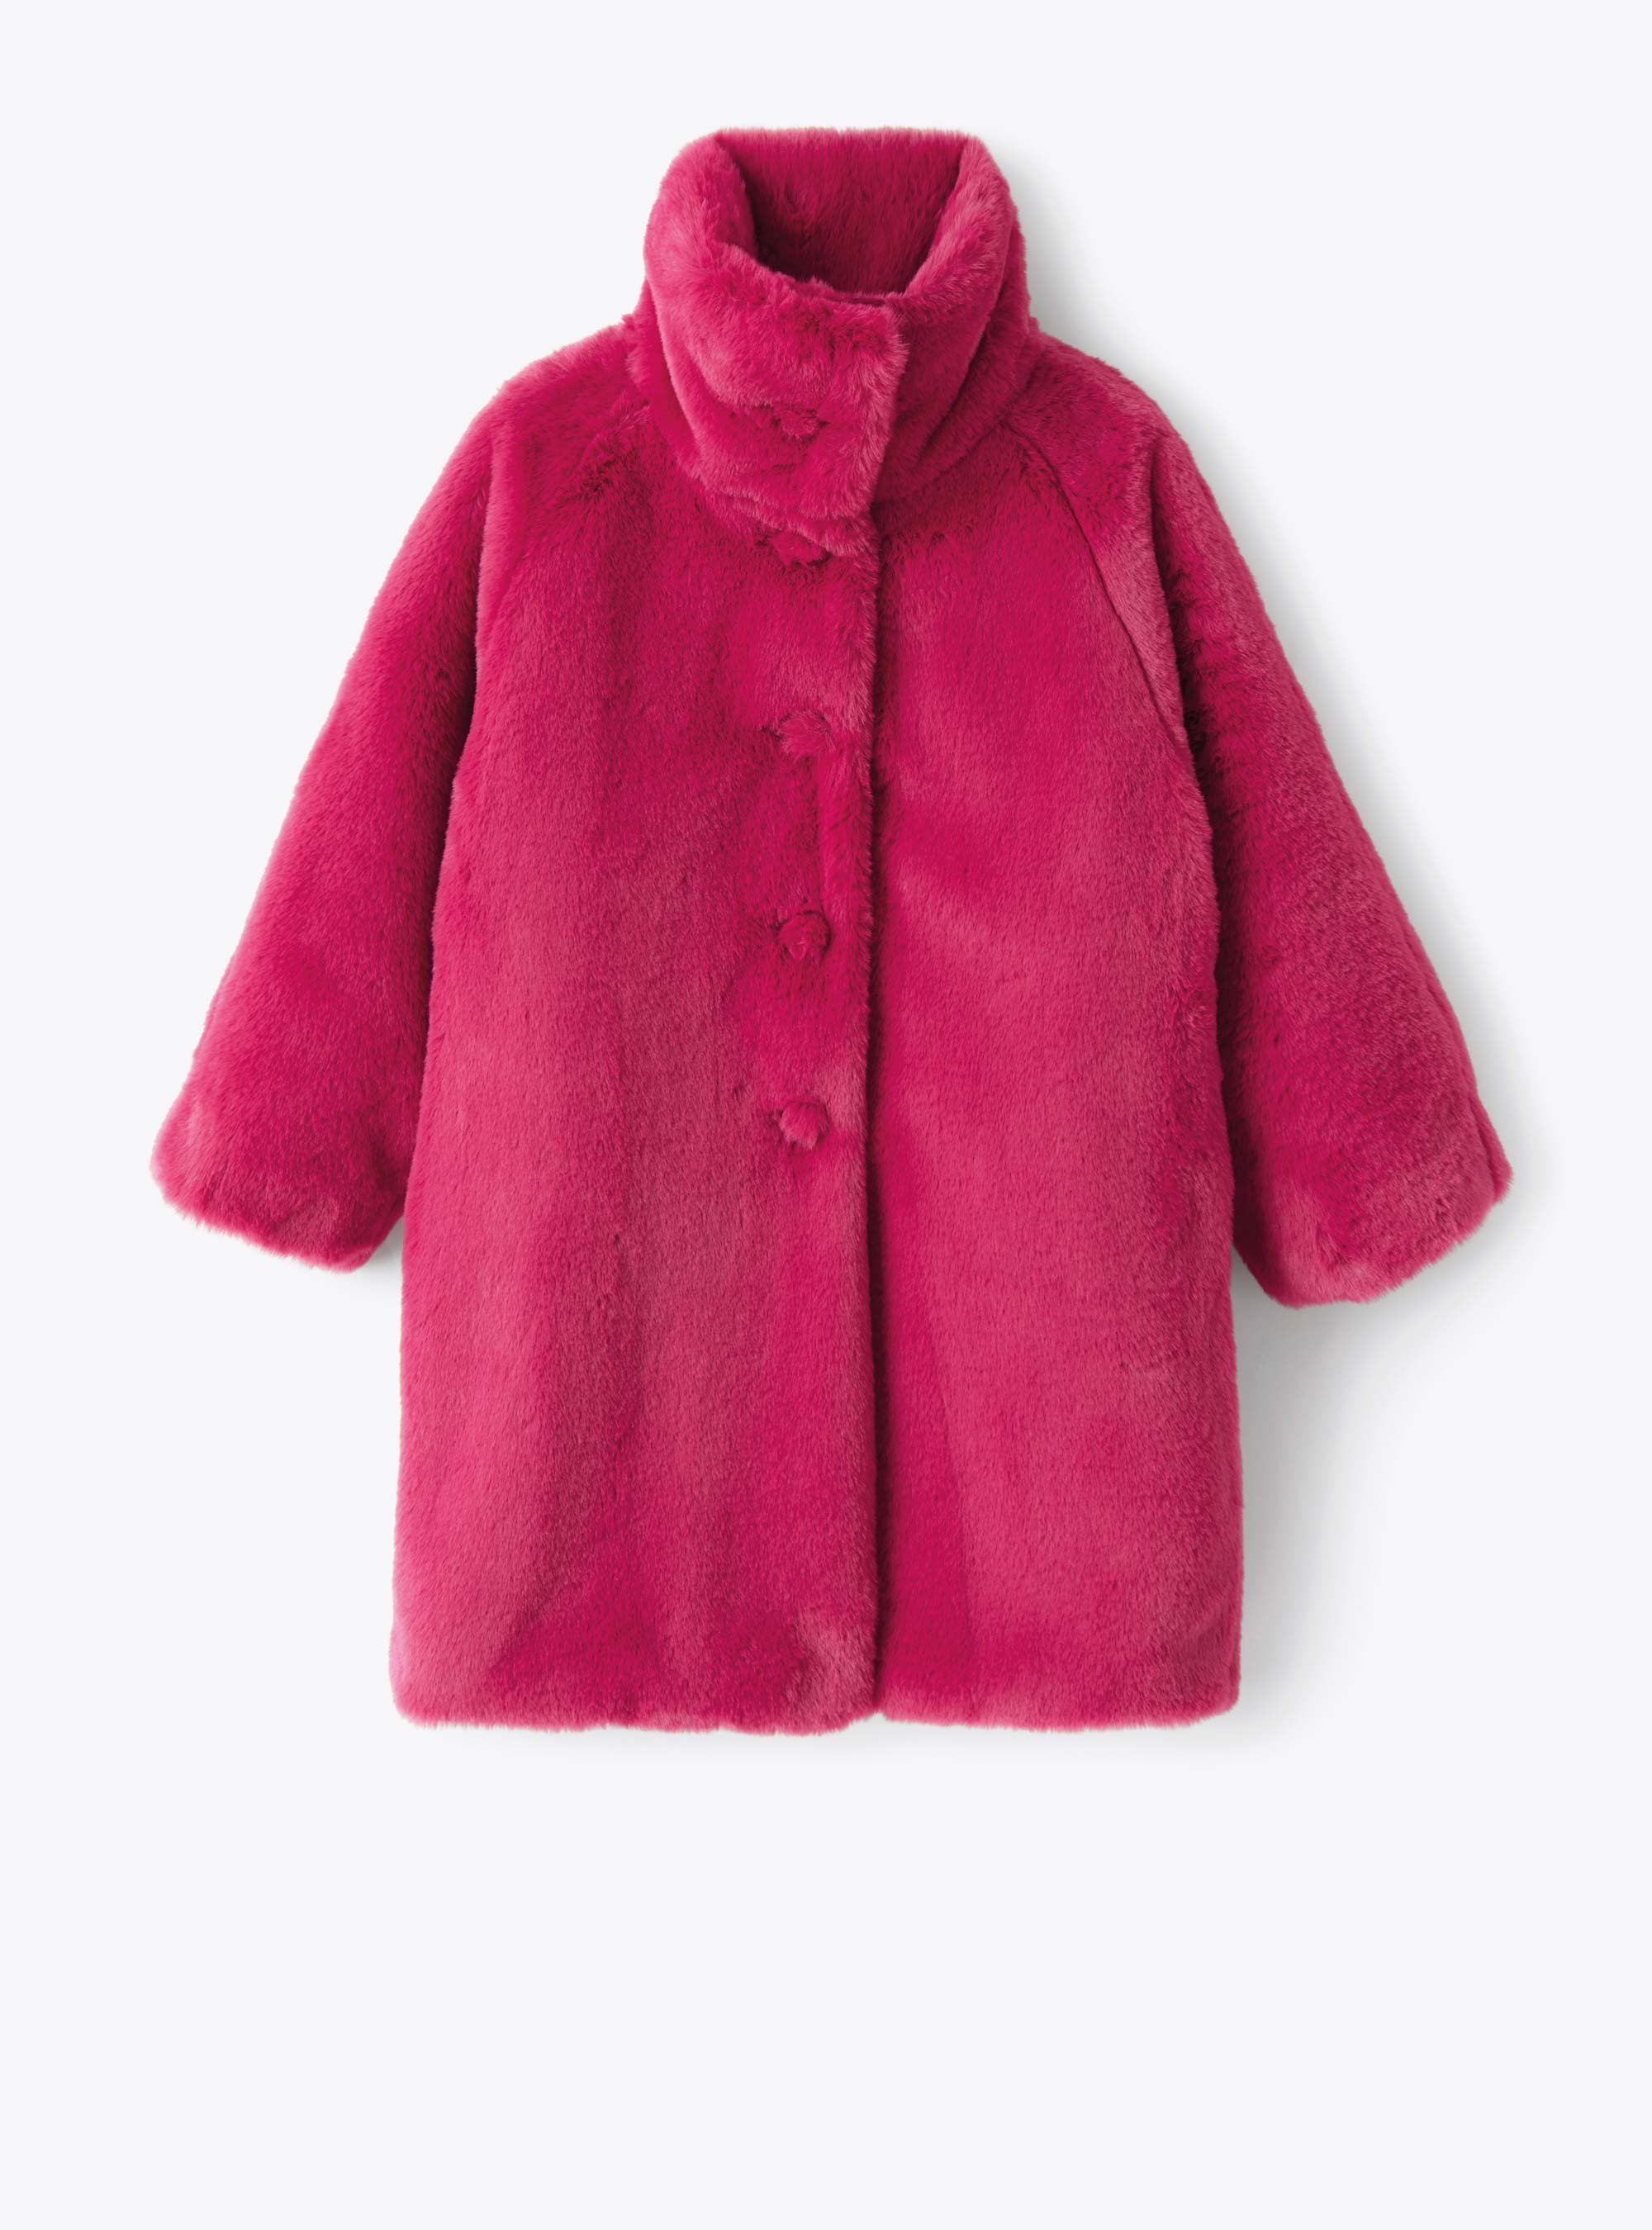 Coat in fuchsia-pink faux fur - Coats - Il Gufo